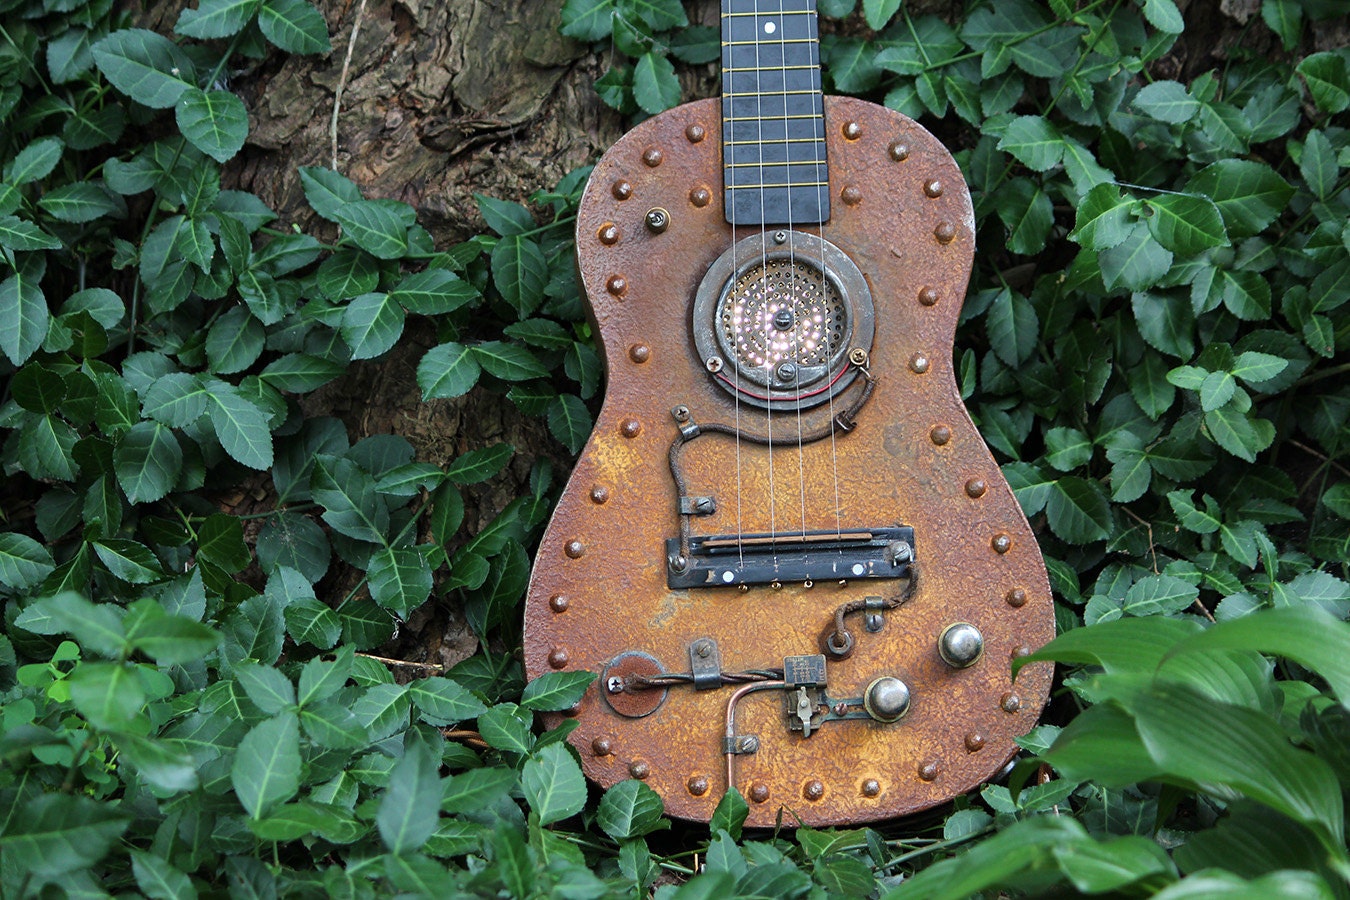 Steampunk Iron Ukulele musical instrument with custom paint